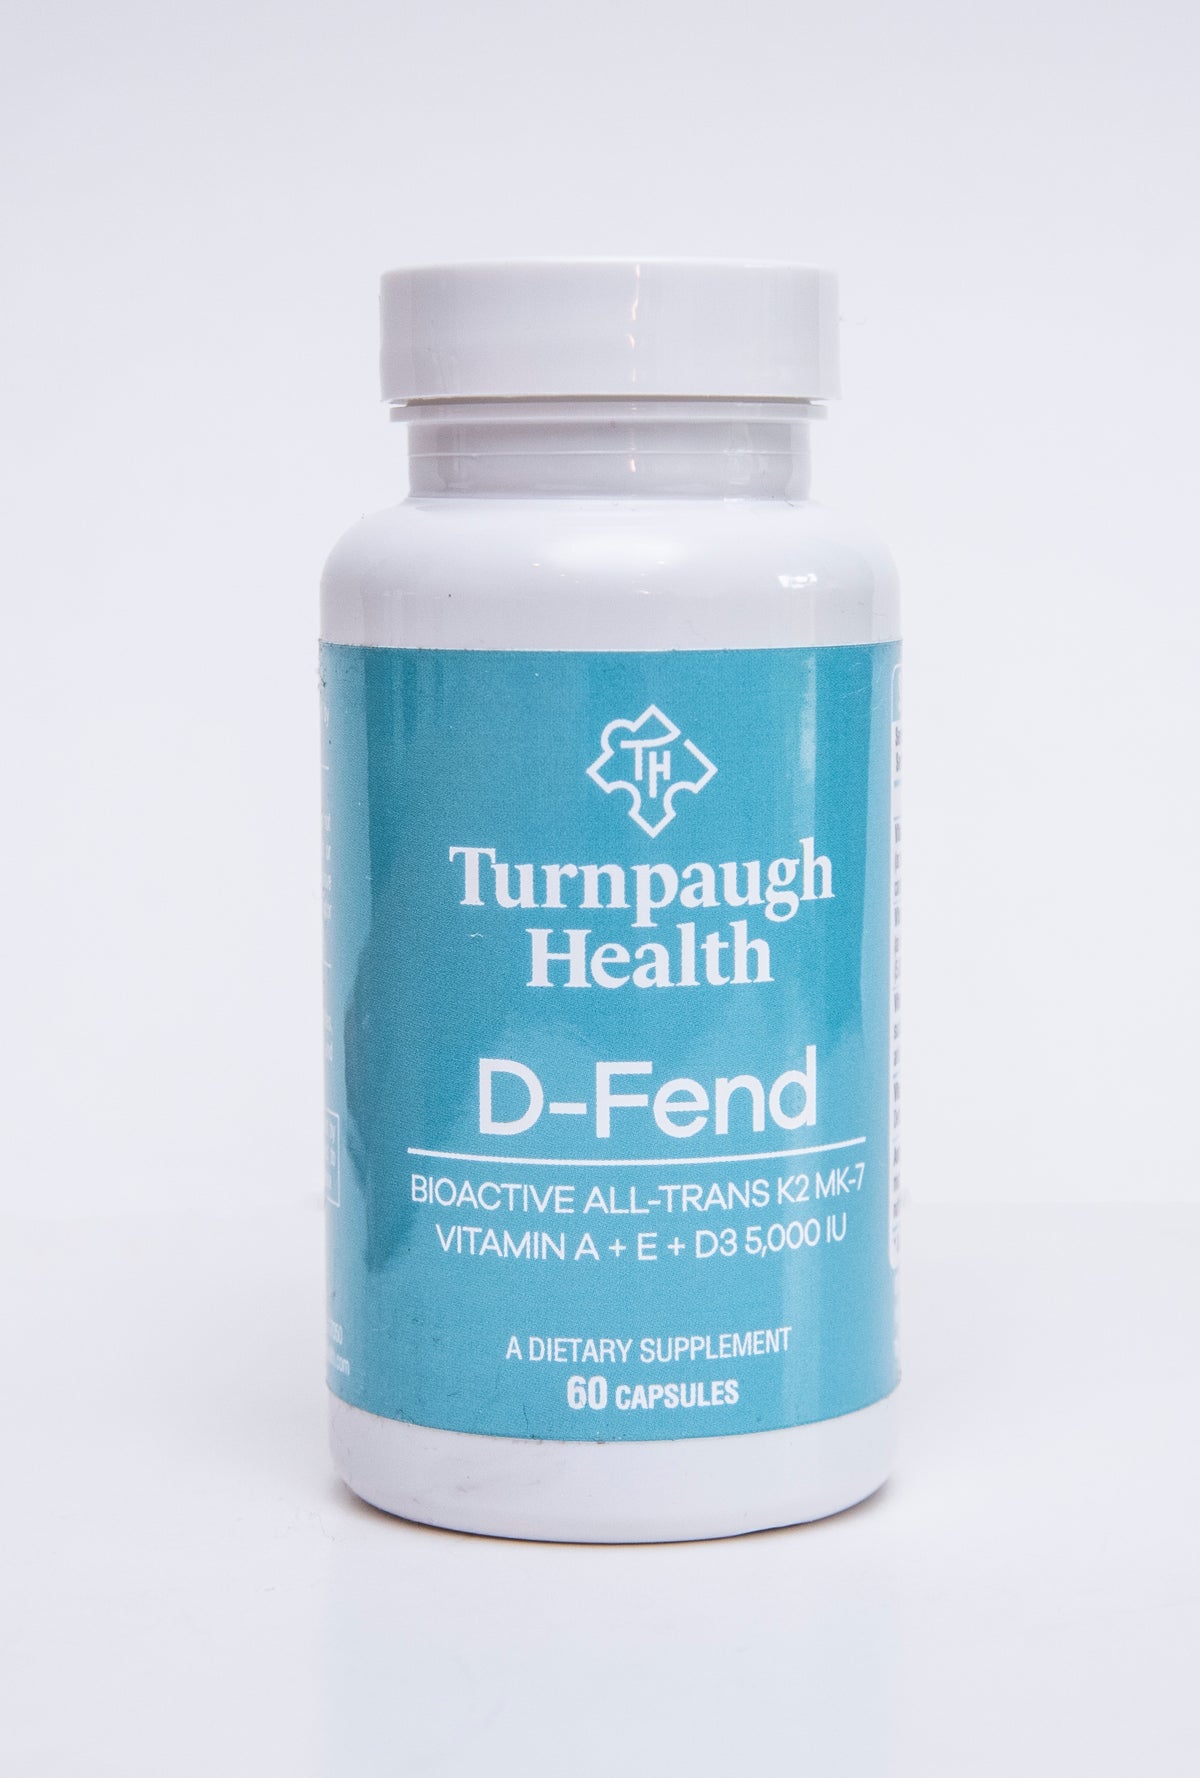 D-Fend (Defend)